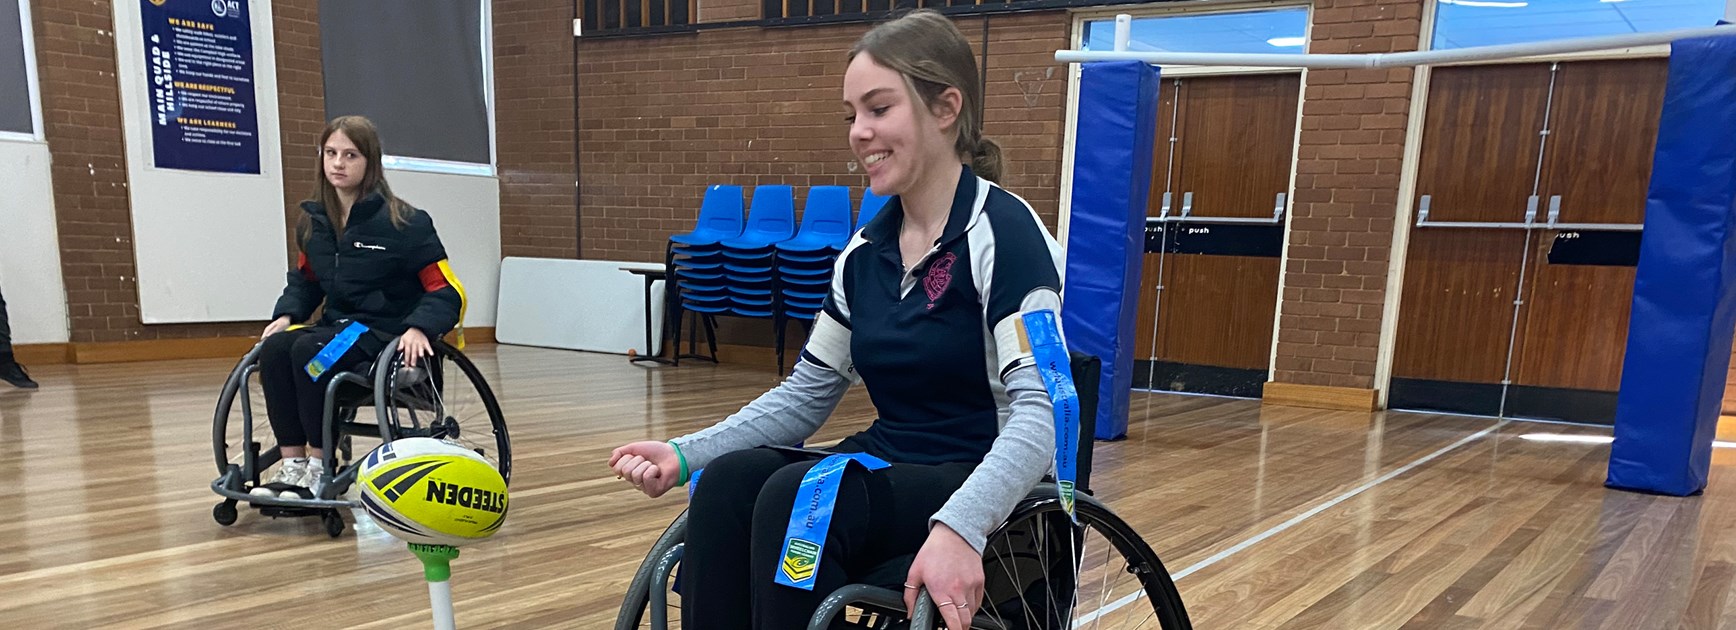 Wheelchair Rugby League School Visit